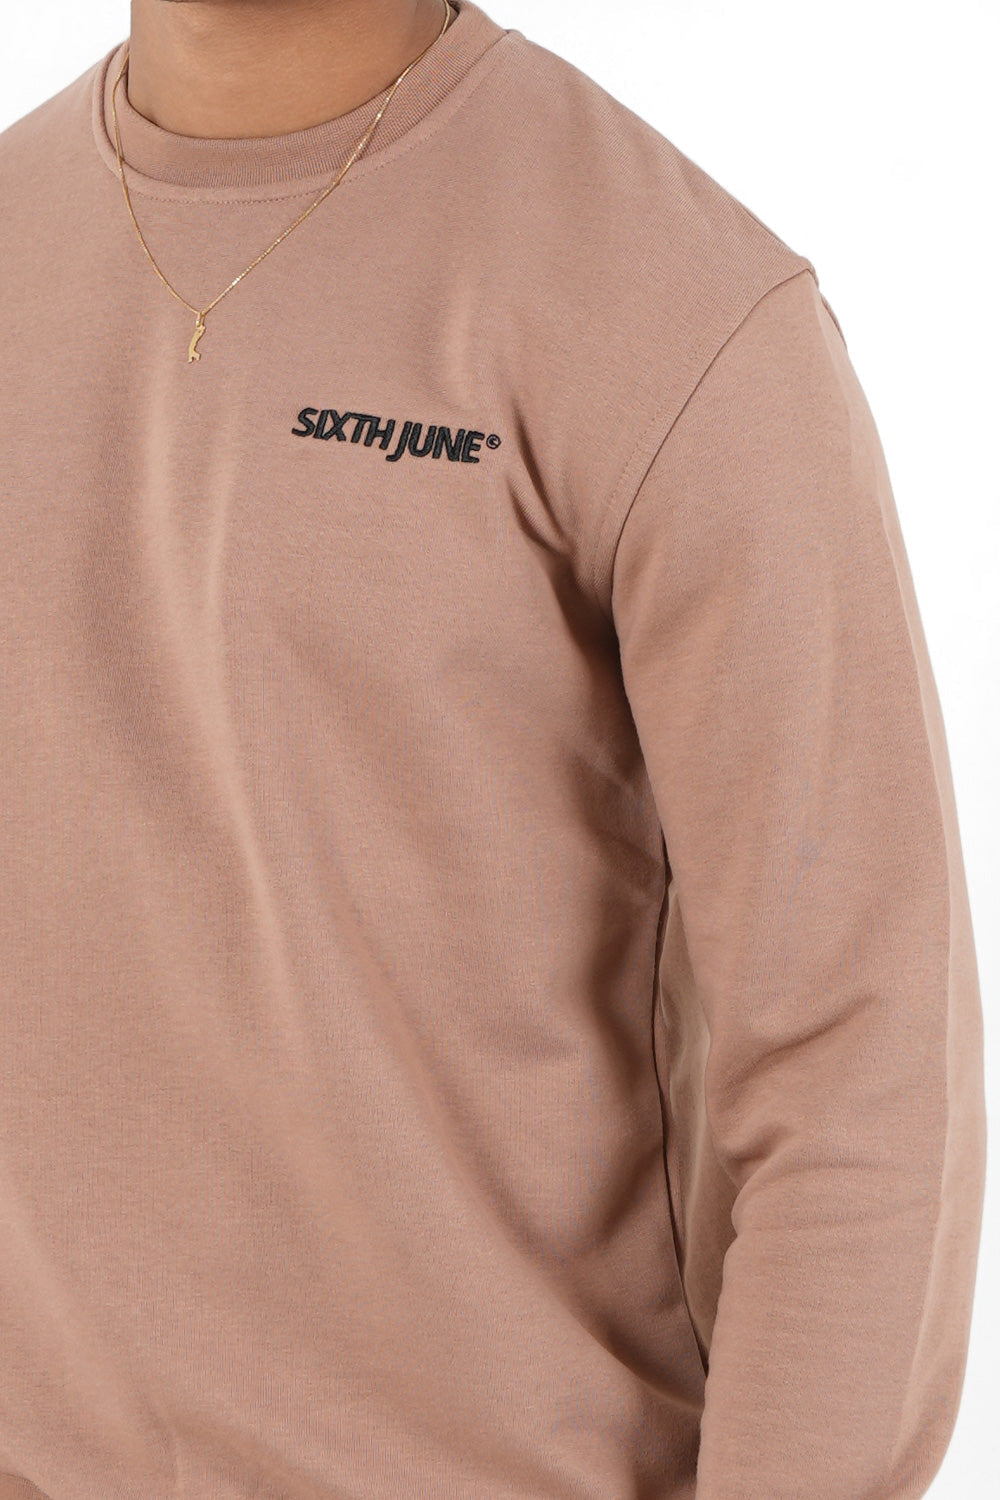 Sweatshirt soft logo brodé Marron clair